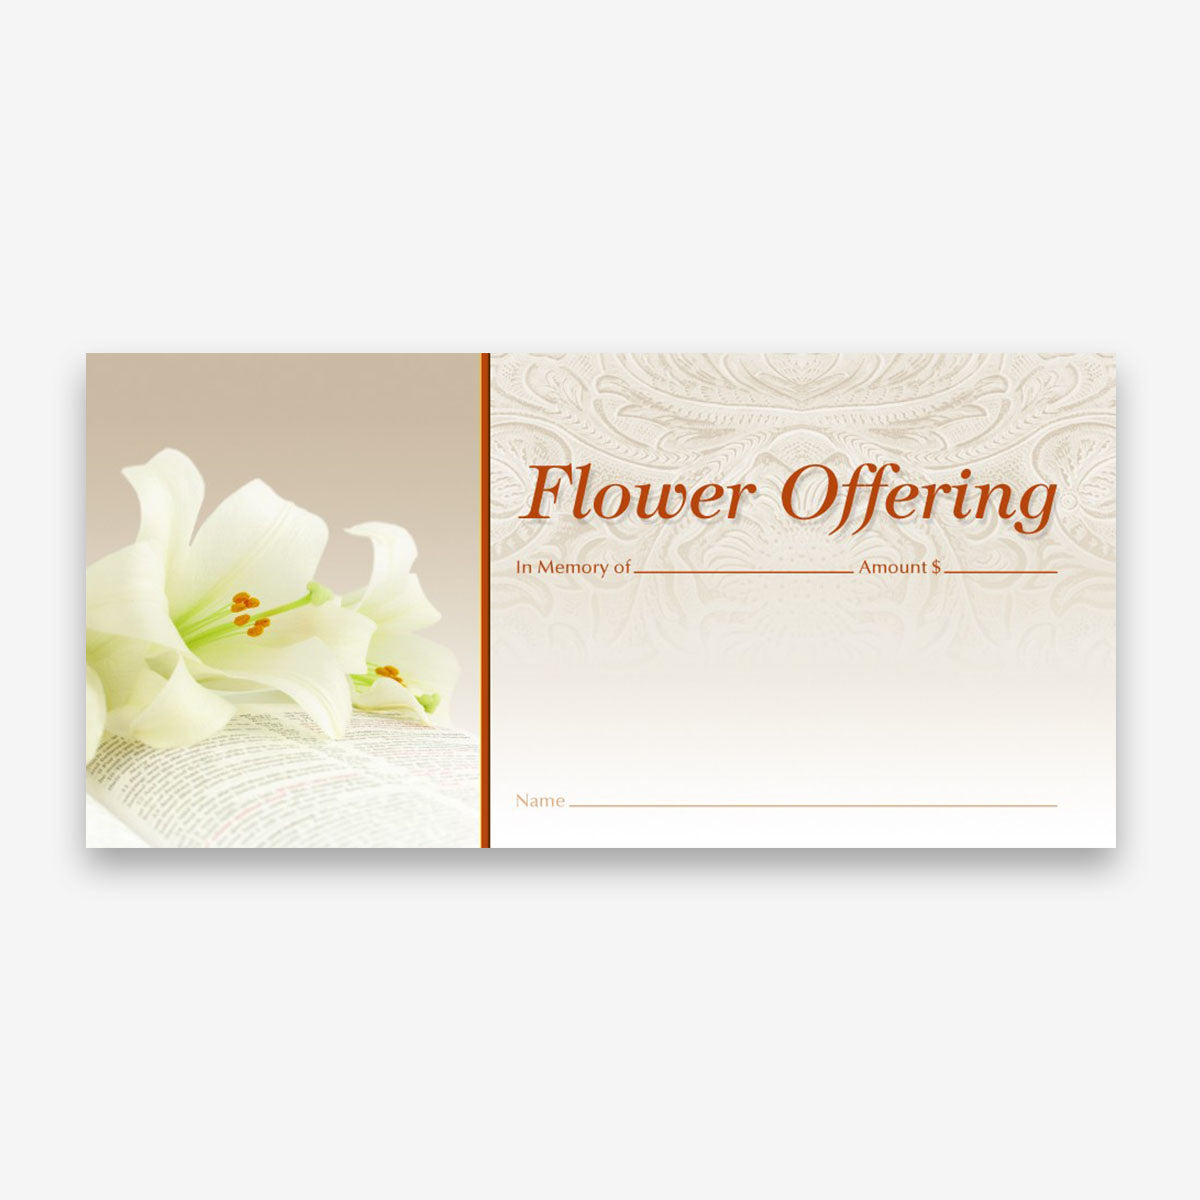 NCS National Church Solutions Premium Easter Flower Offering Envelope